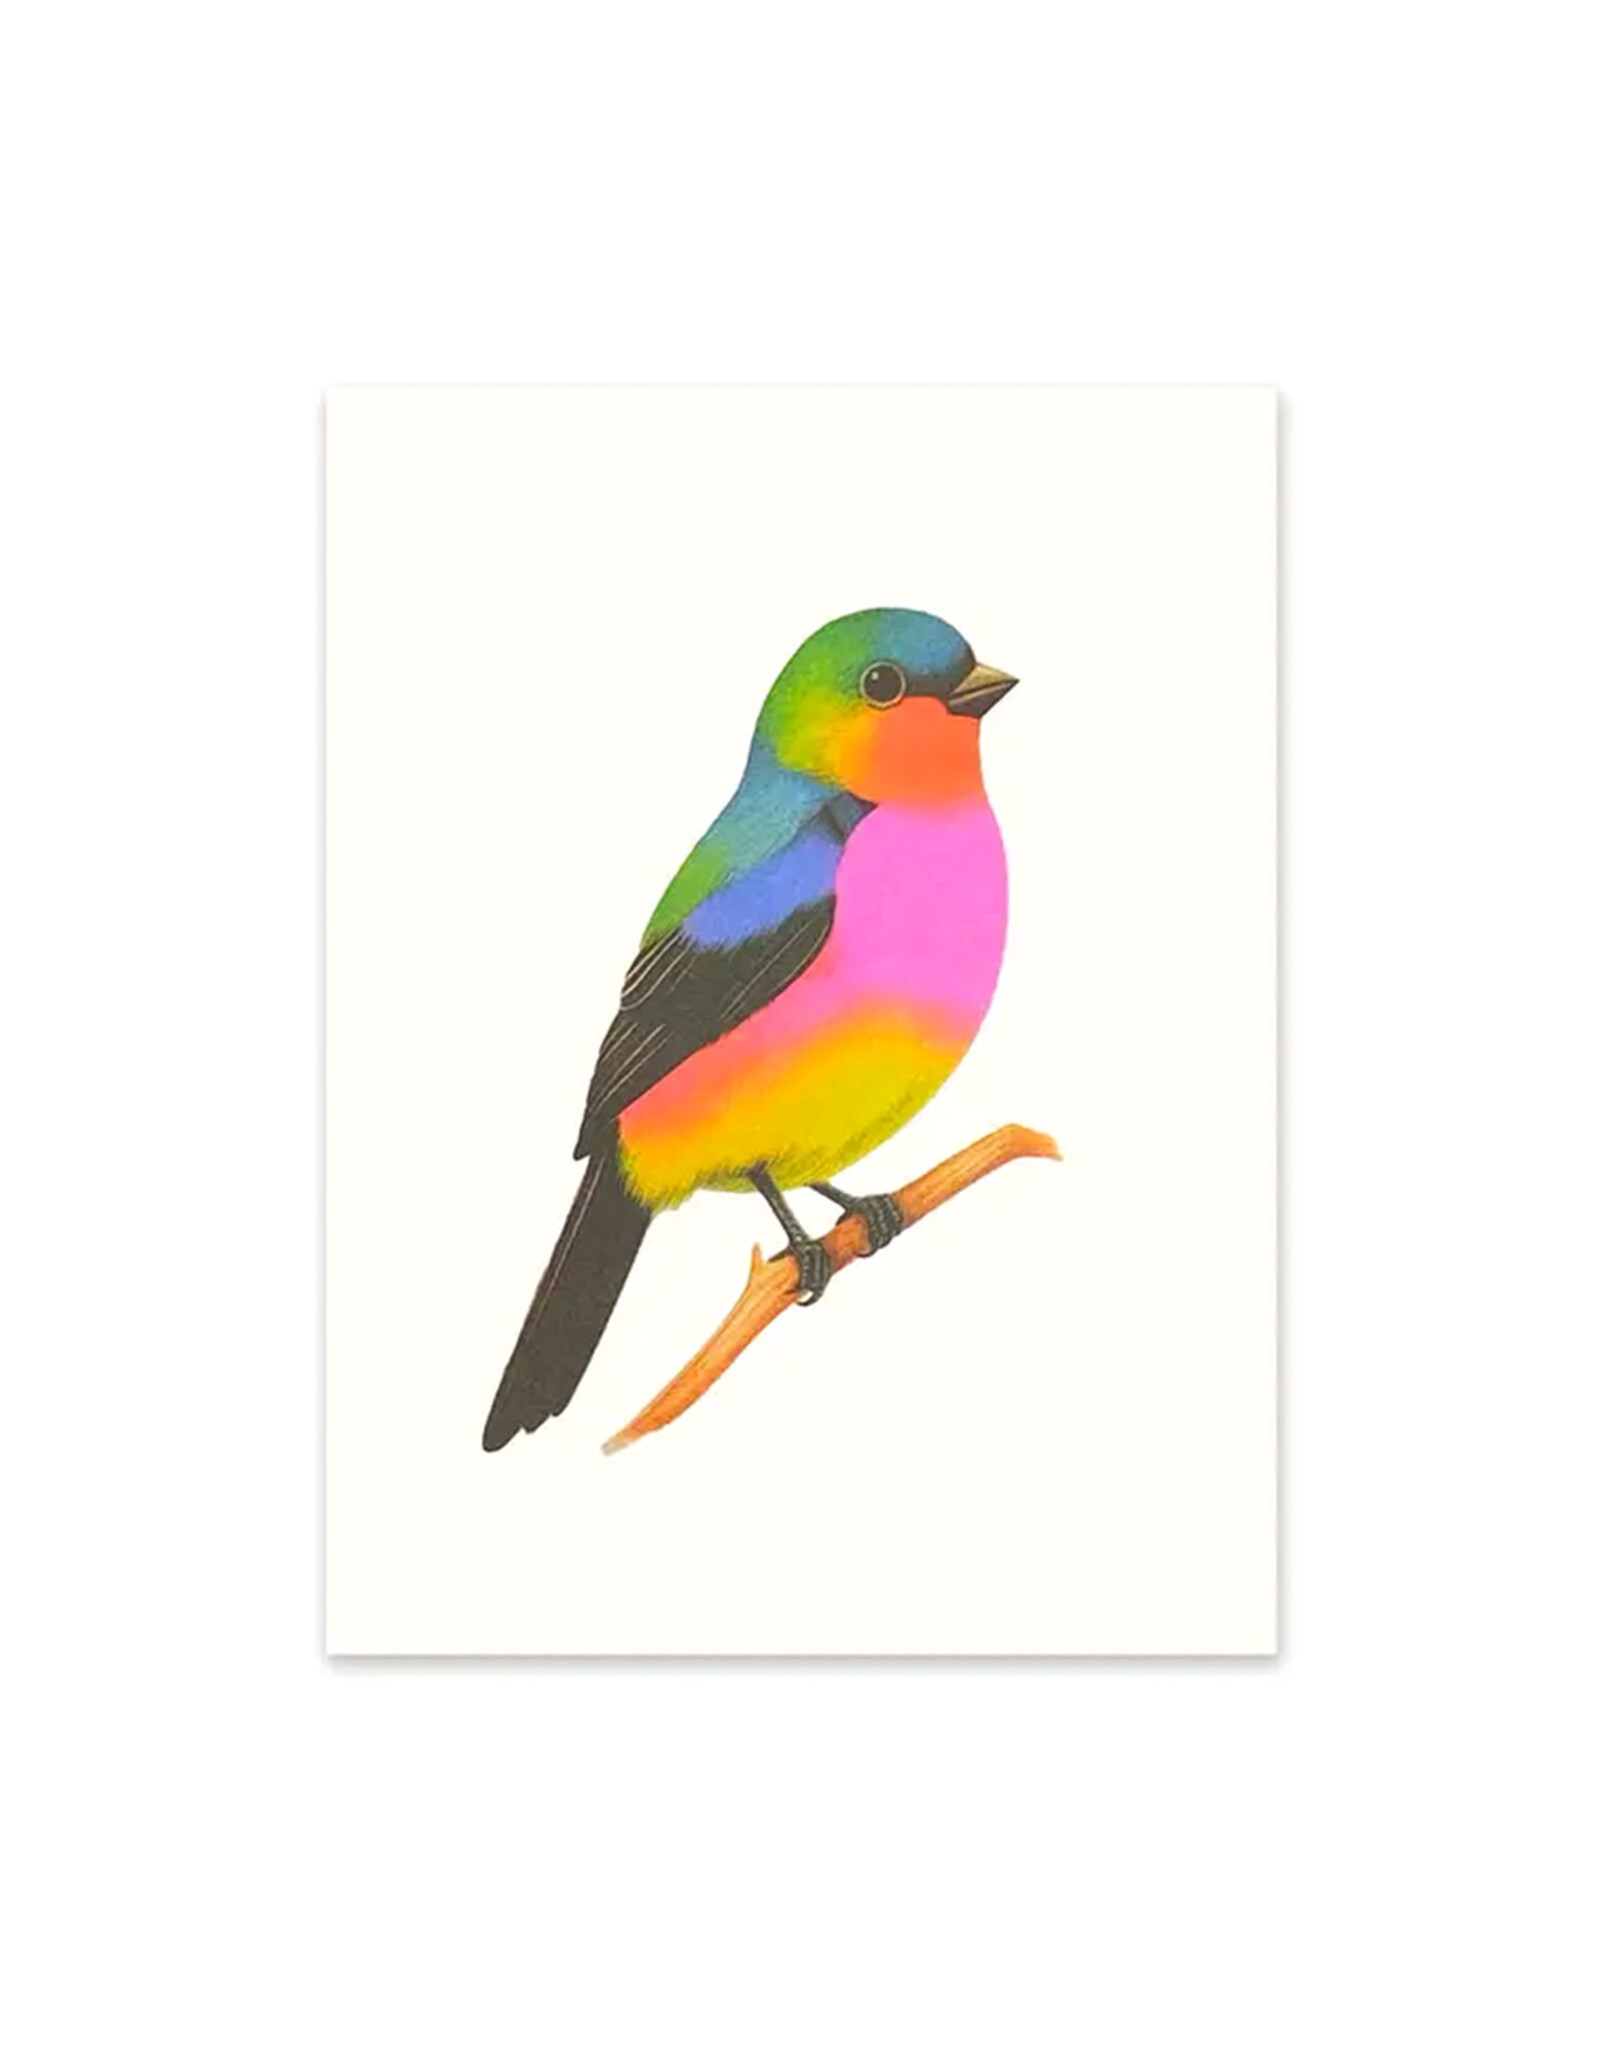 Neon Bird on a Branch Art Print